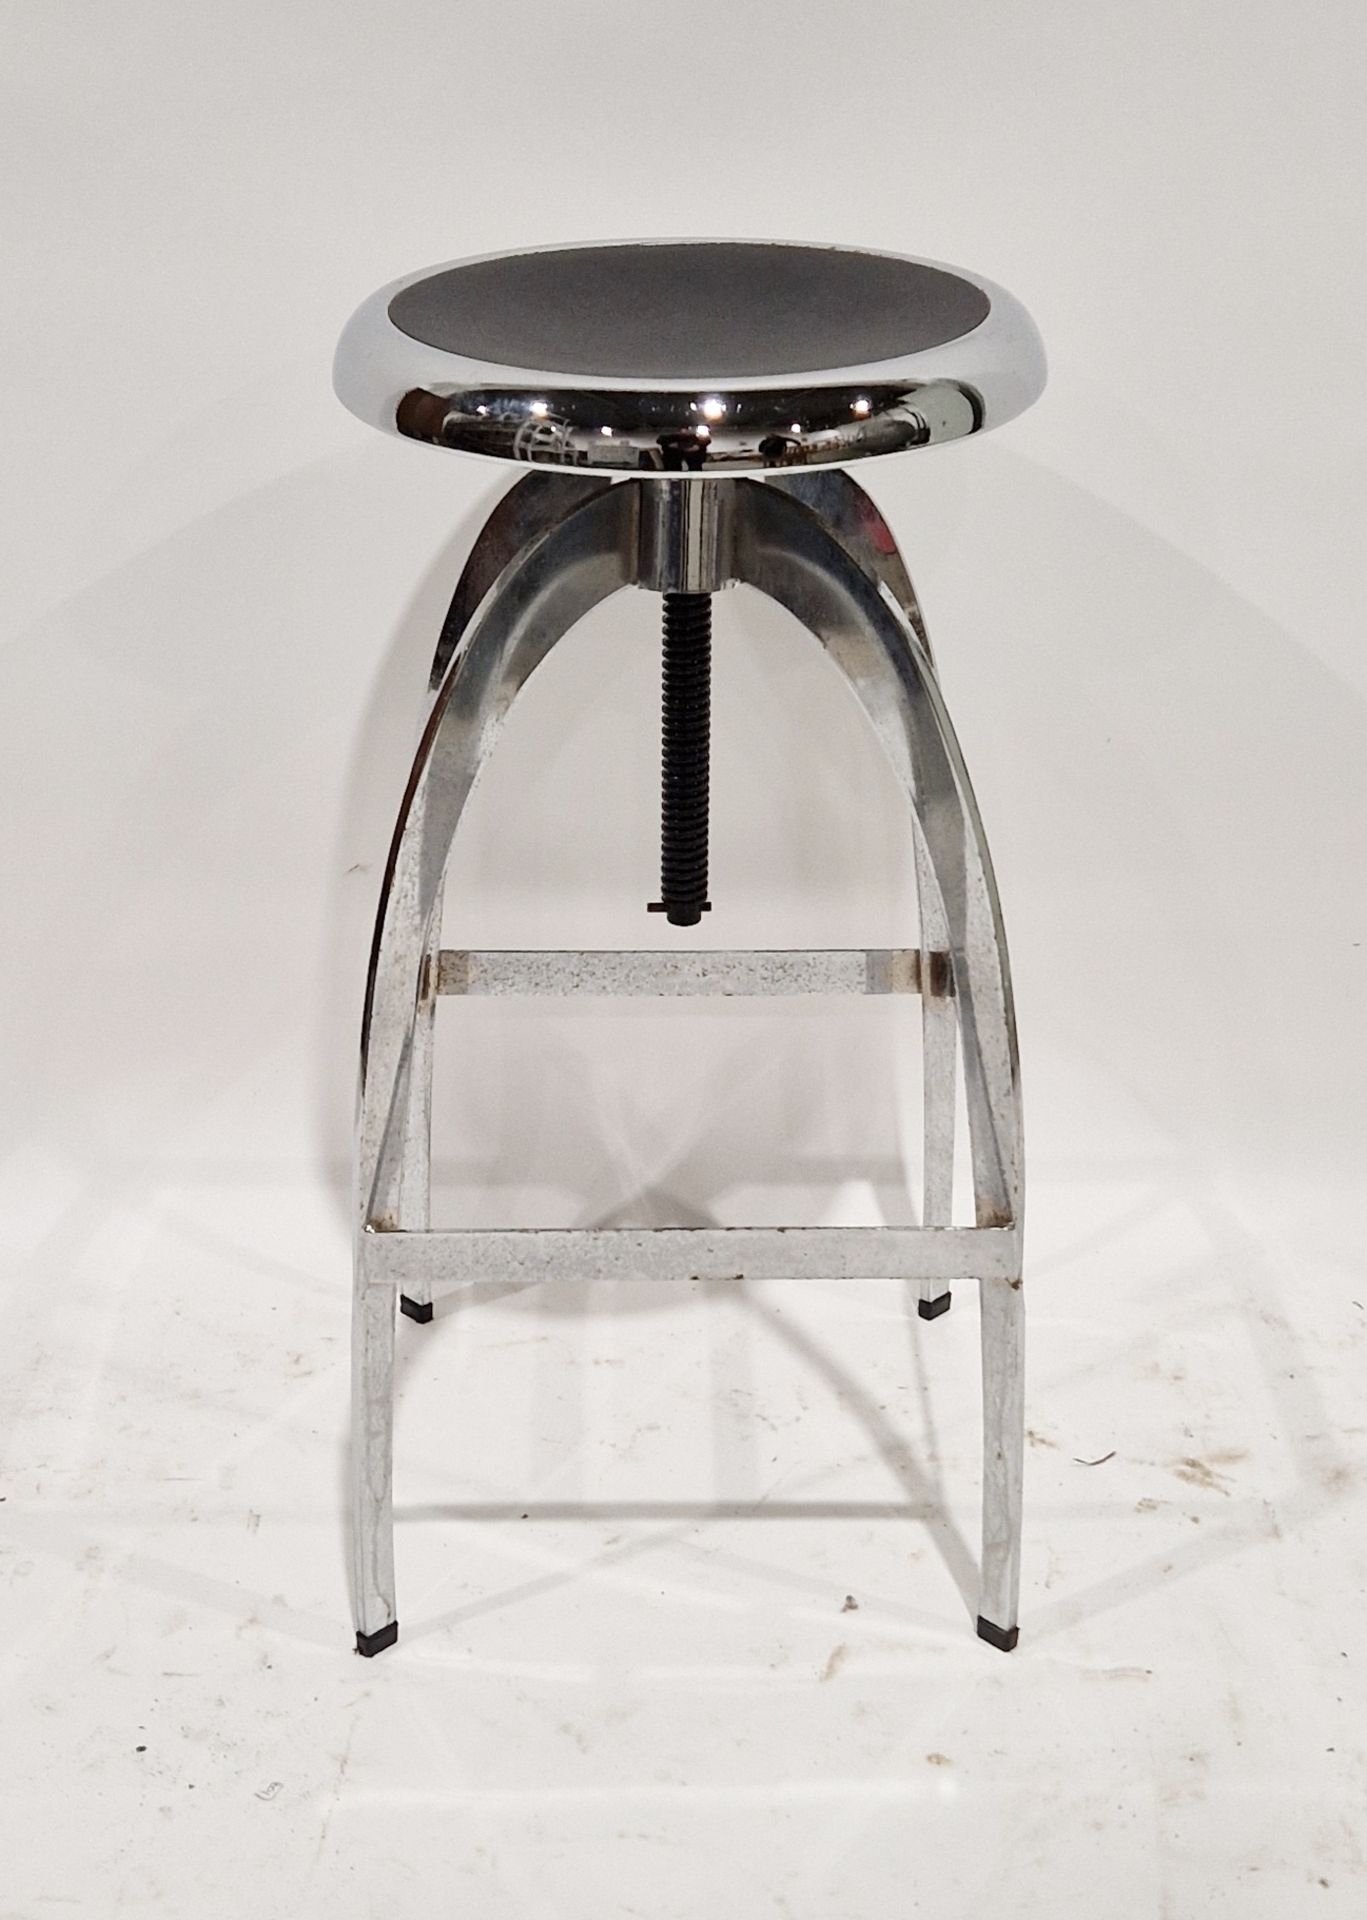 Modern chrome adjustable bar stool, 68cm high - Image 3 of 3